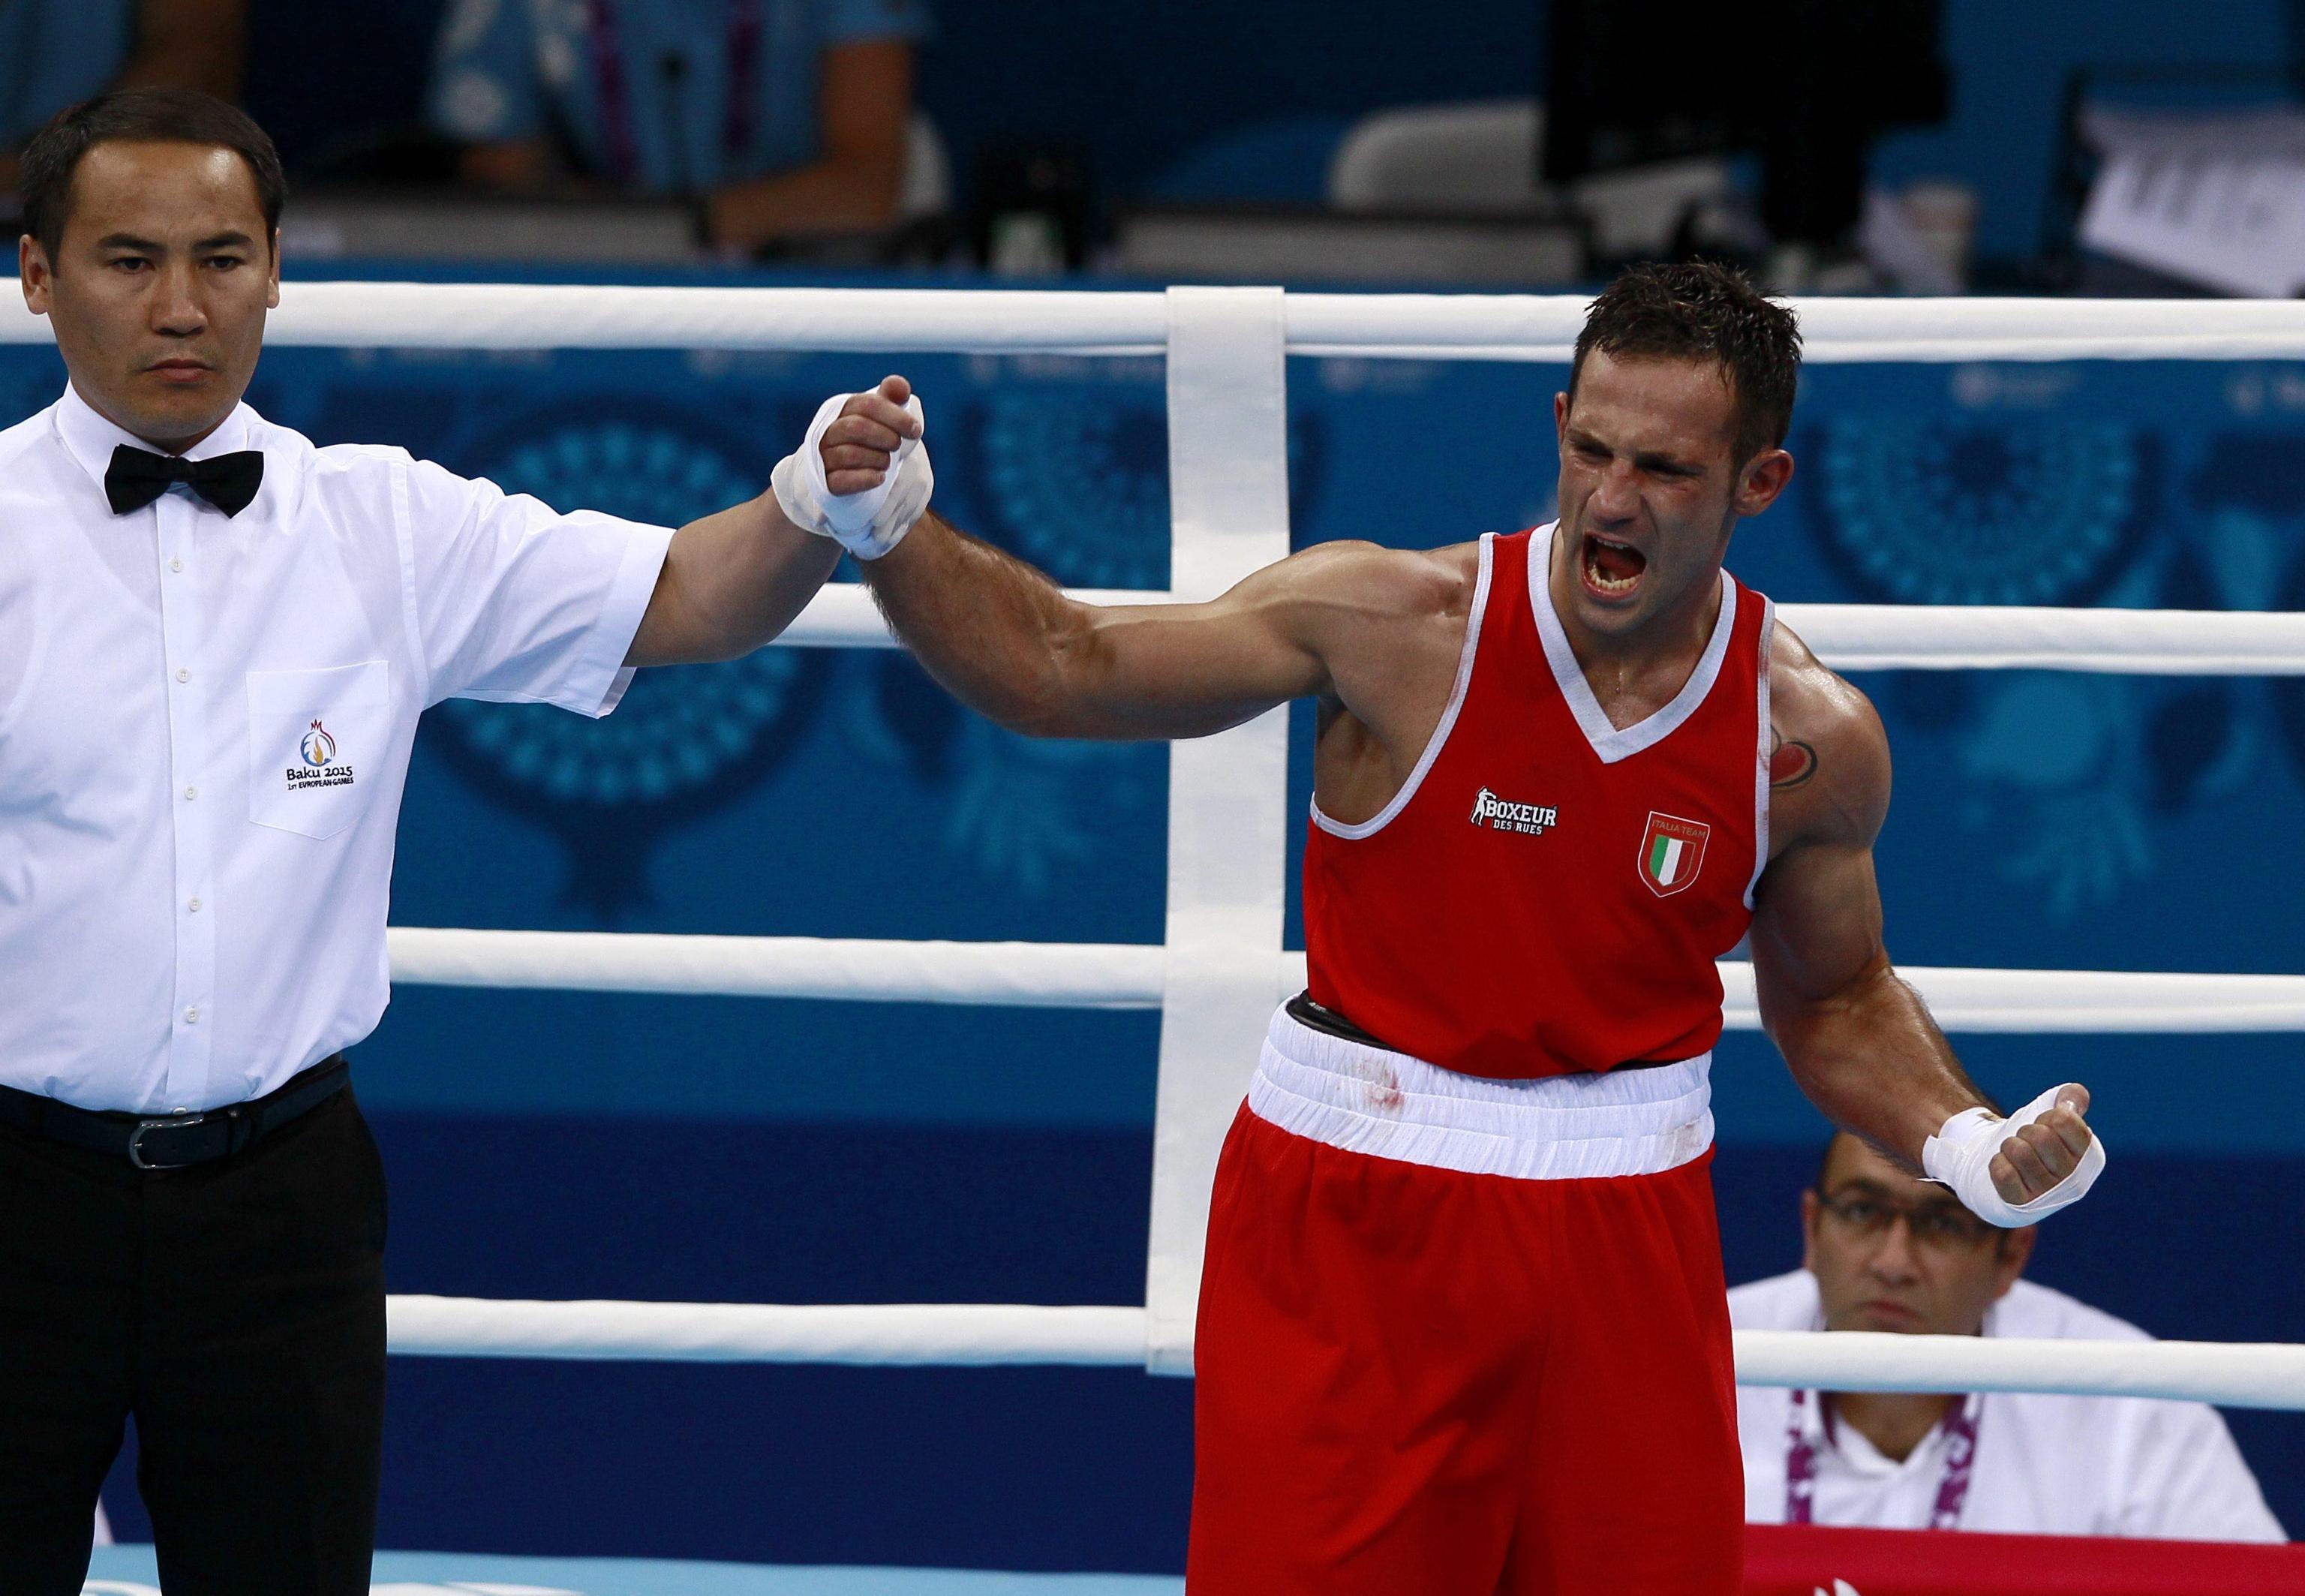 Vincenzo Mangiacapre celebrates victory in men's semi final at the 2015 European Games in Baku